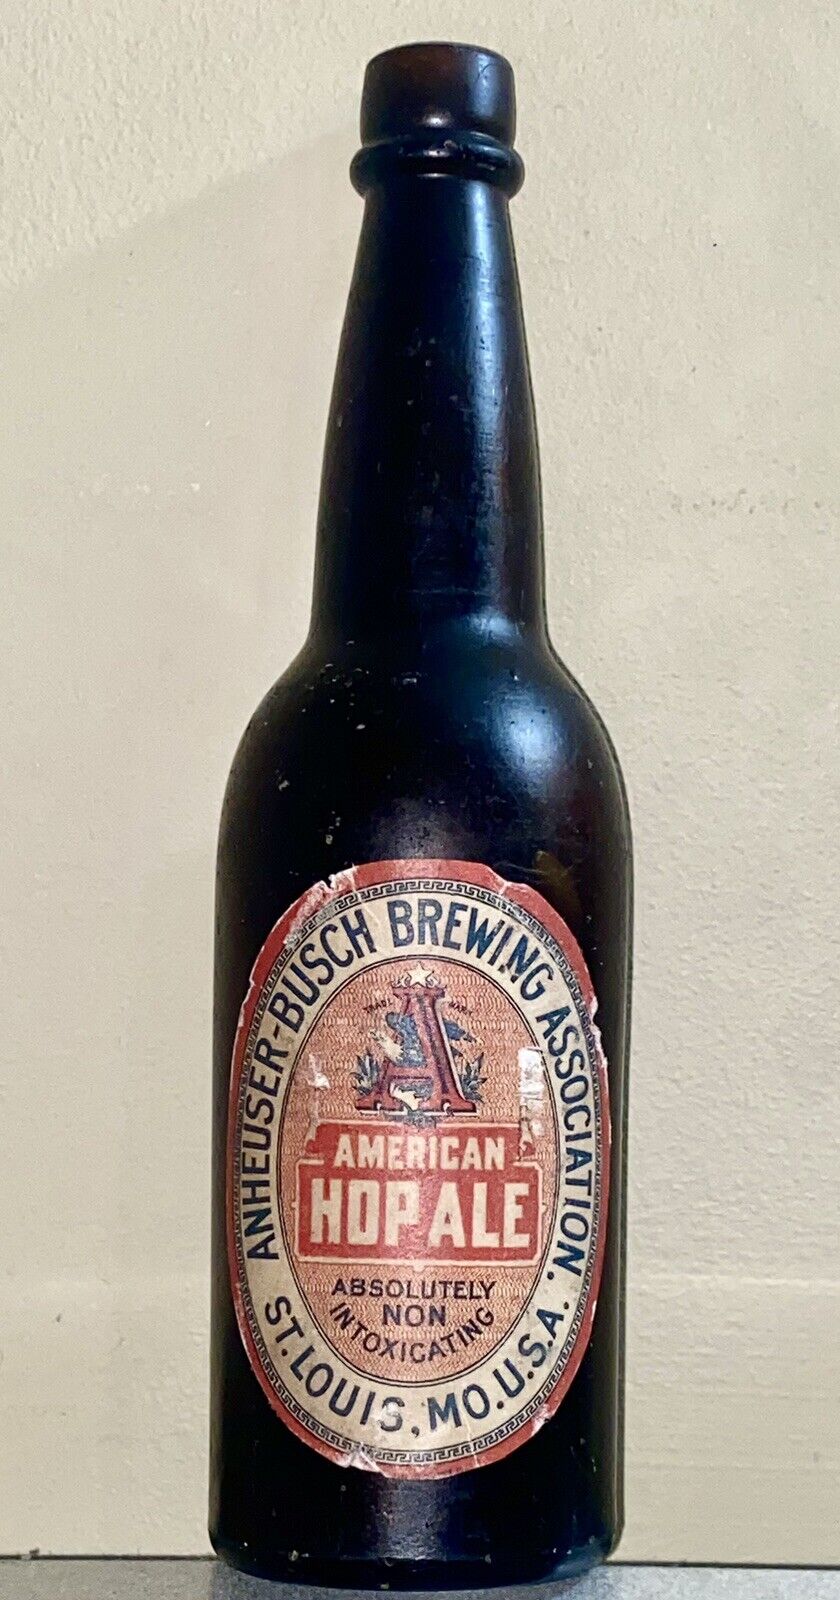 American Hop Ale Beer Bottle Anheuser Busch Assn. St. Louis, MO. Pre-prohibition